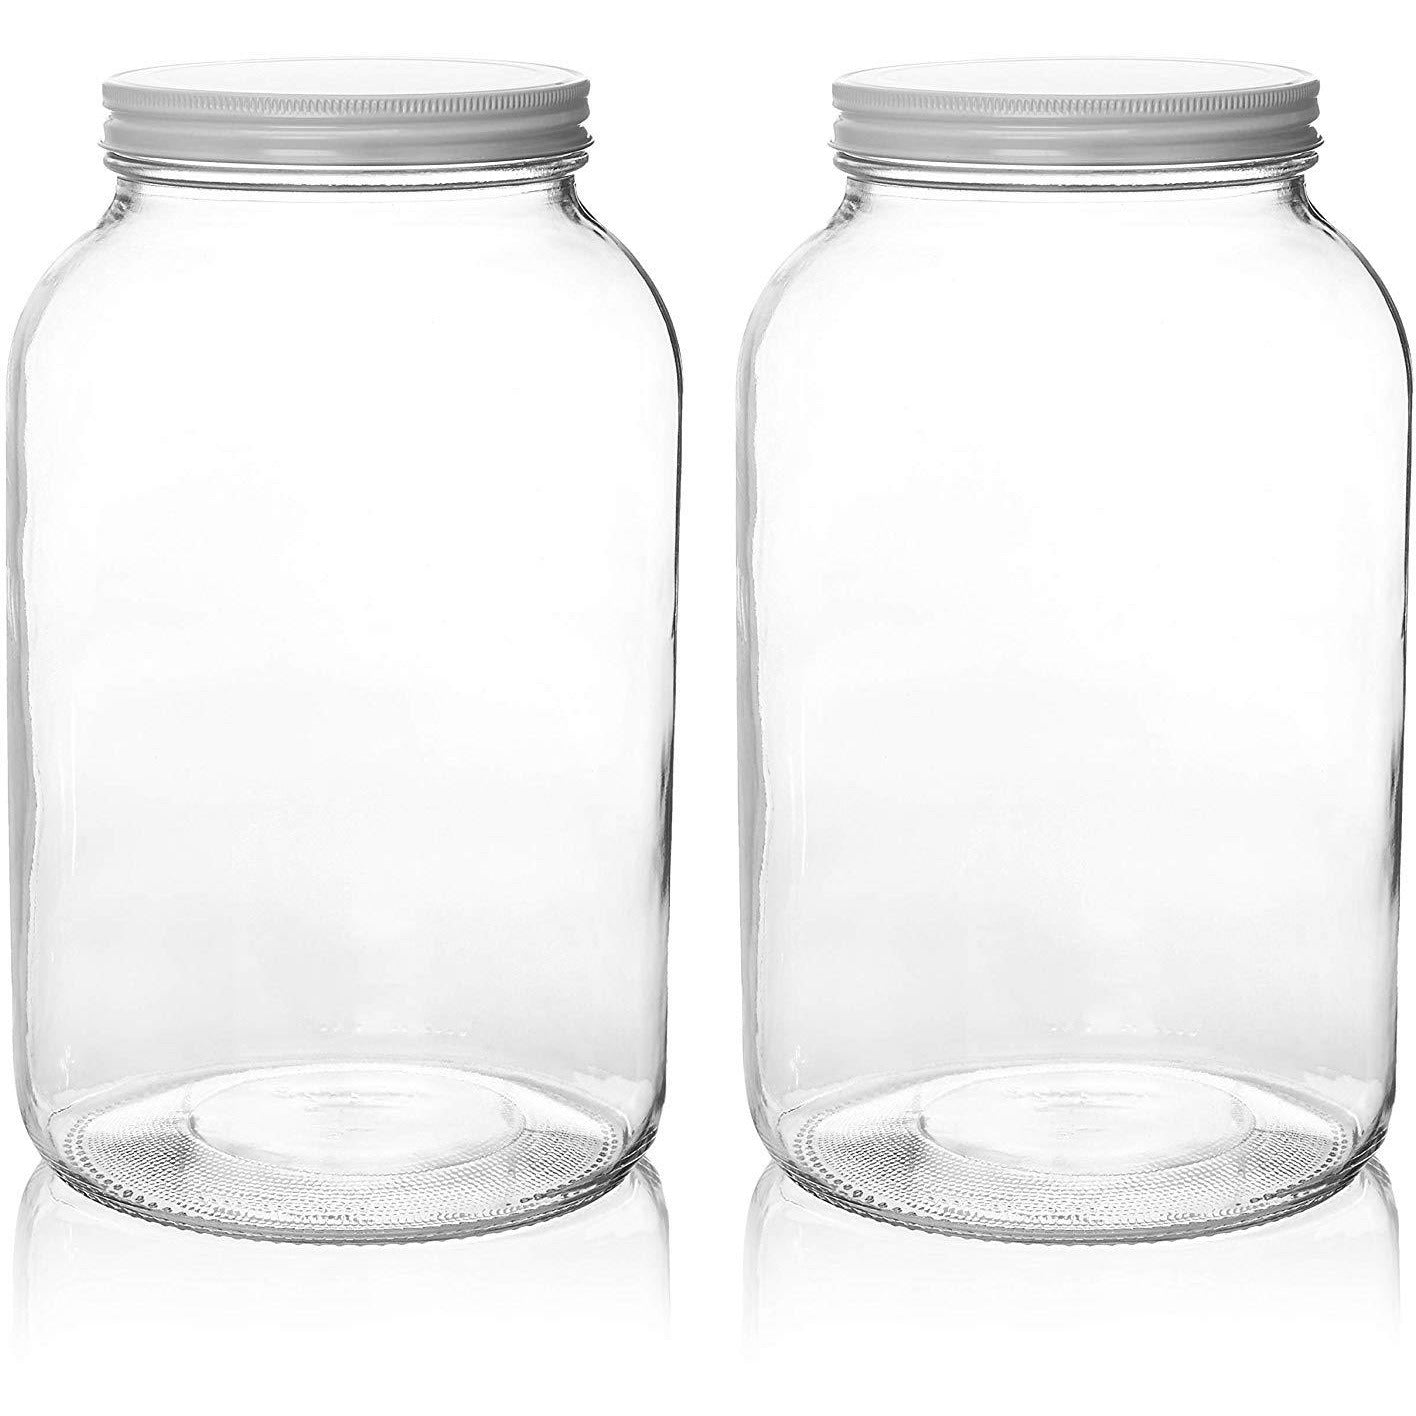 Wide Mouth 1 Gallon Glass Jar With Lid - Glass Gallon Jar For Kombucha &  Sun Tea - Gallon Mason Jars Are Large Glass Jars With Lids 1 Gallon For  Food